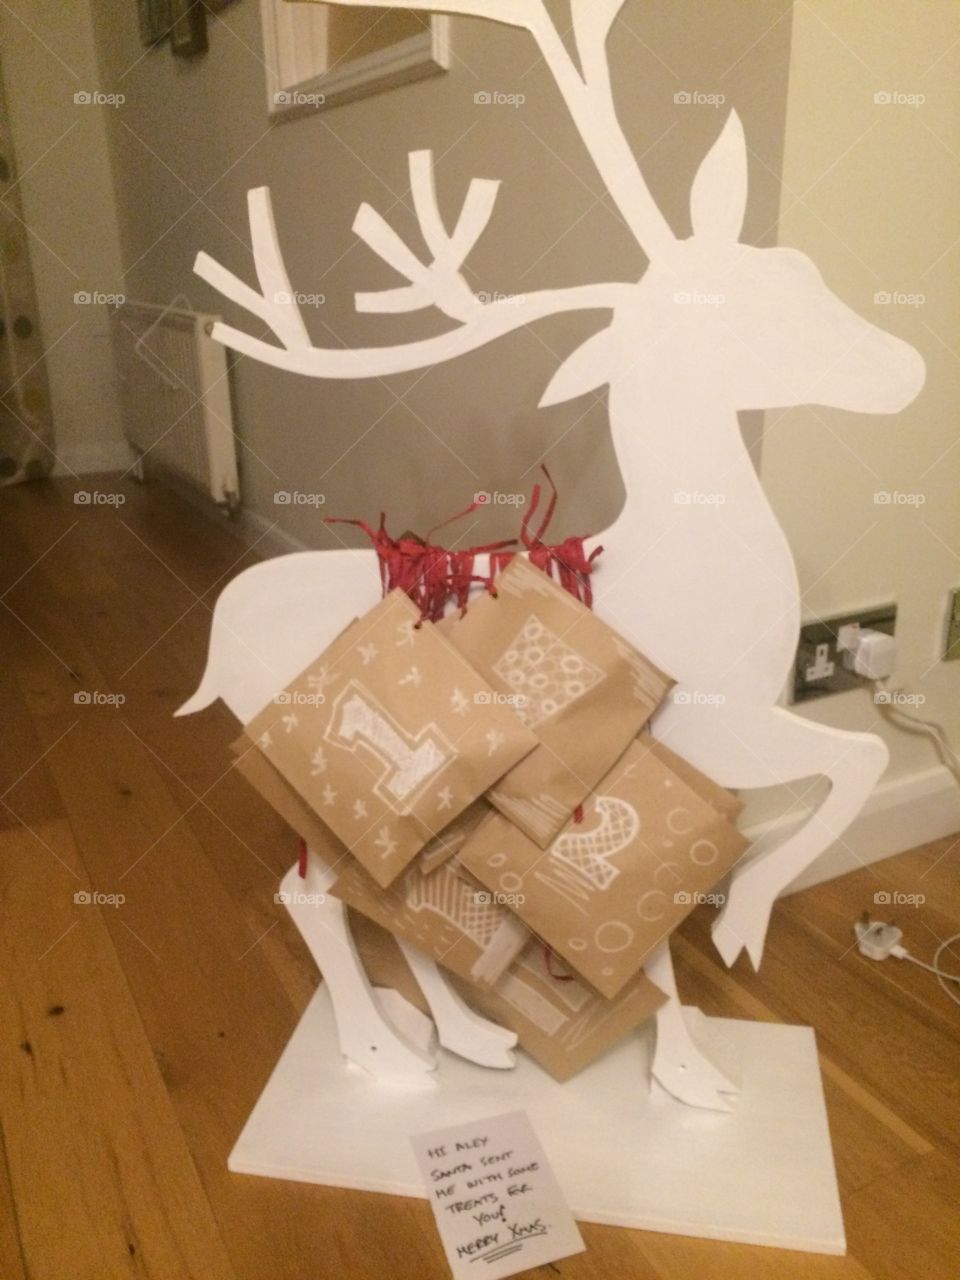 Handcrafted reindeer advent calendar